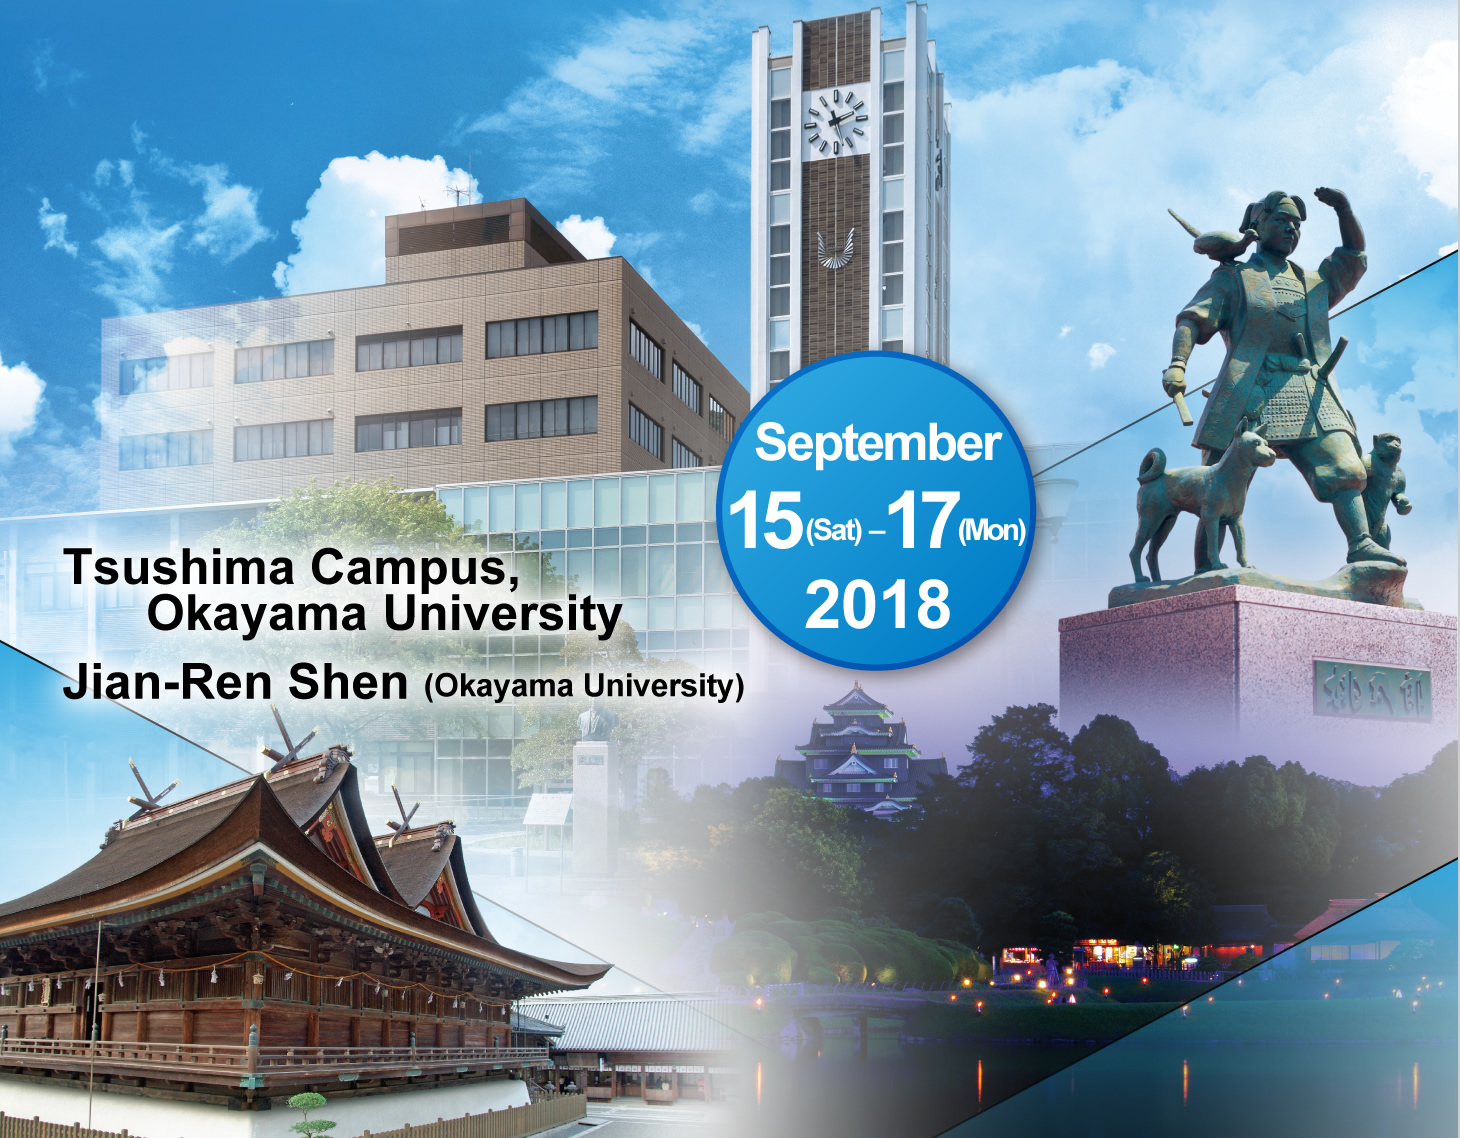 September 15(Aat) – 17(Mon), 2018
Tsushima Campus, Okayama University
Jian-Ren Shen (Okayama University)